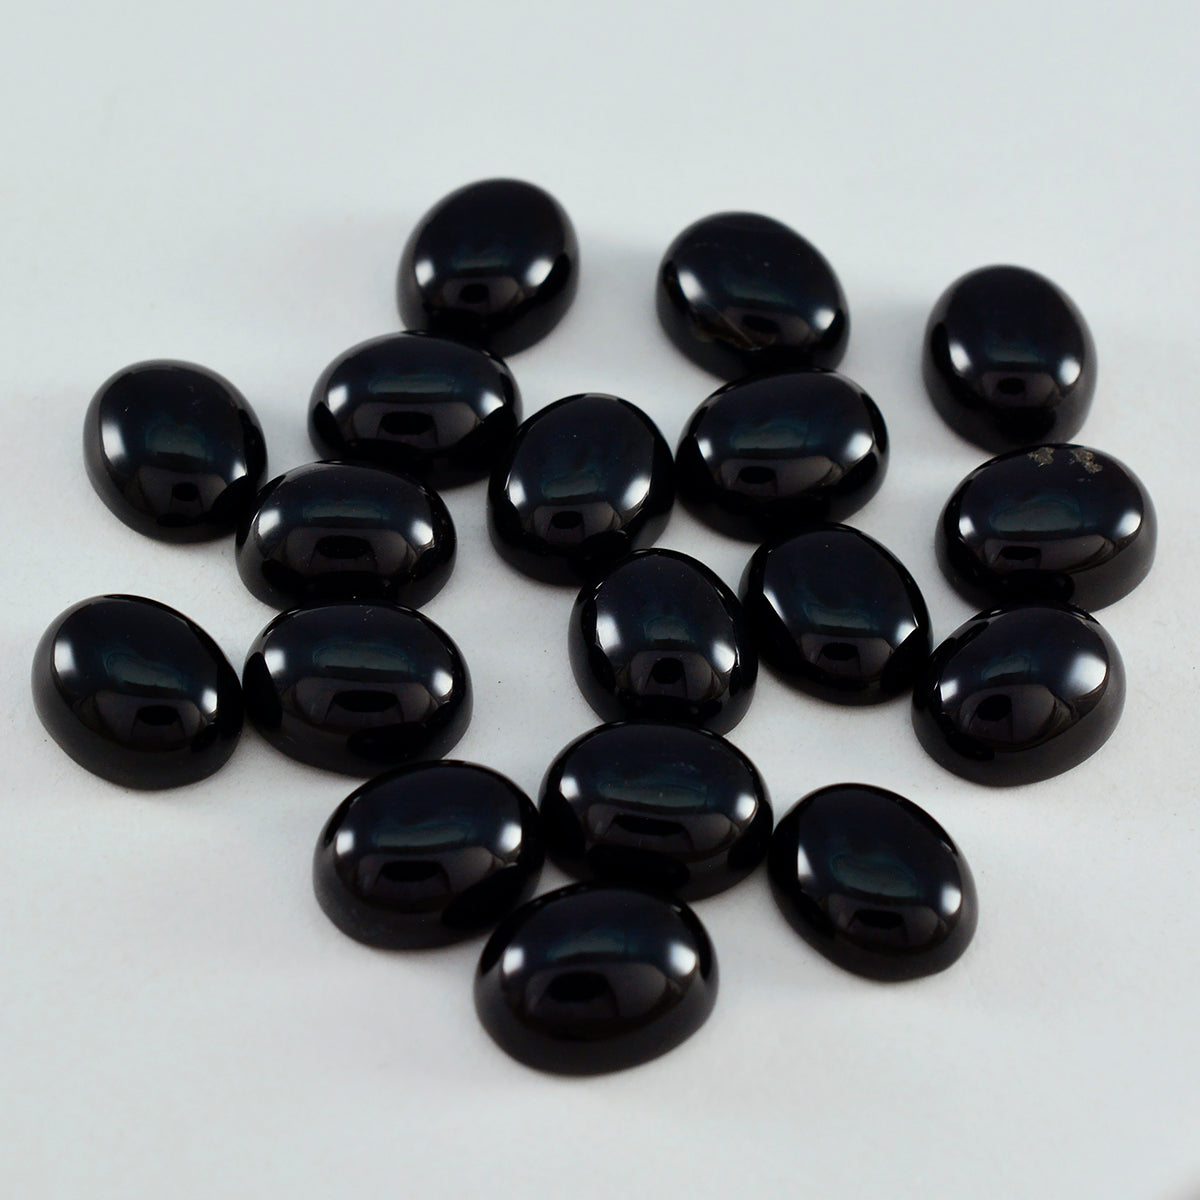 Riyogems 1PC Black Onyx Cabochon 6x8 mm Oval Shape excellent Quality Gemstone